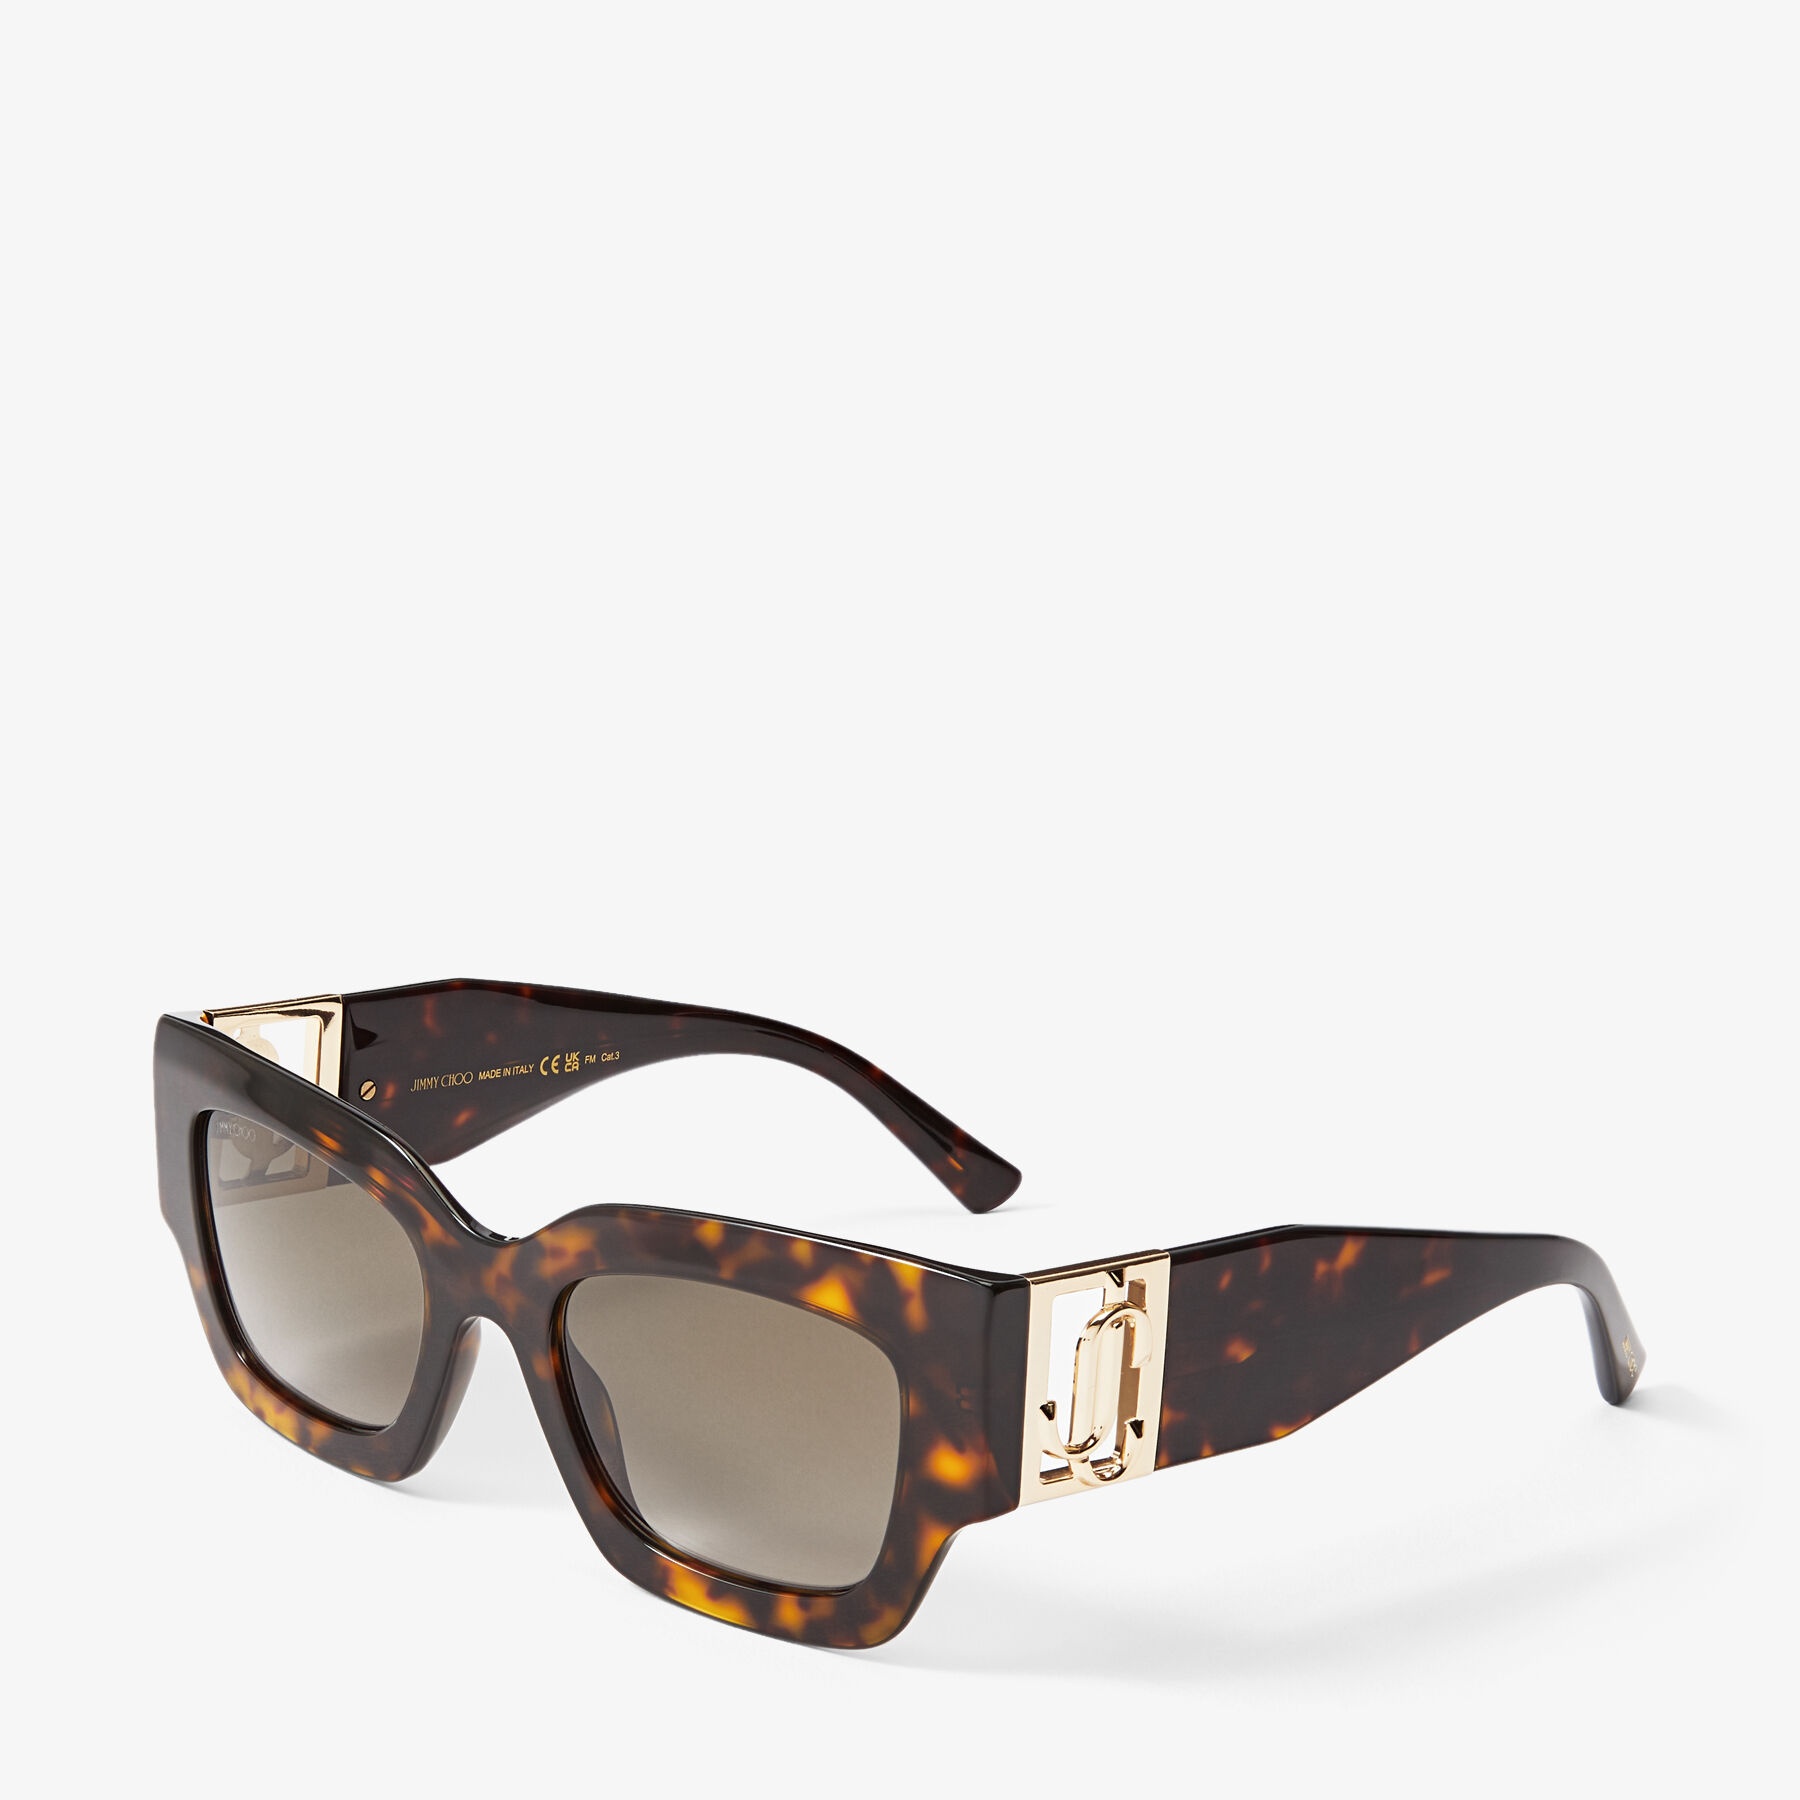 Nena
Brown Havana Square Frame Sunglasses with JC Emblem - 3